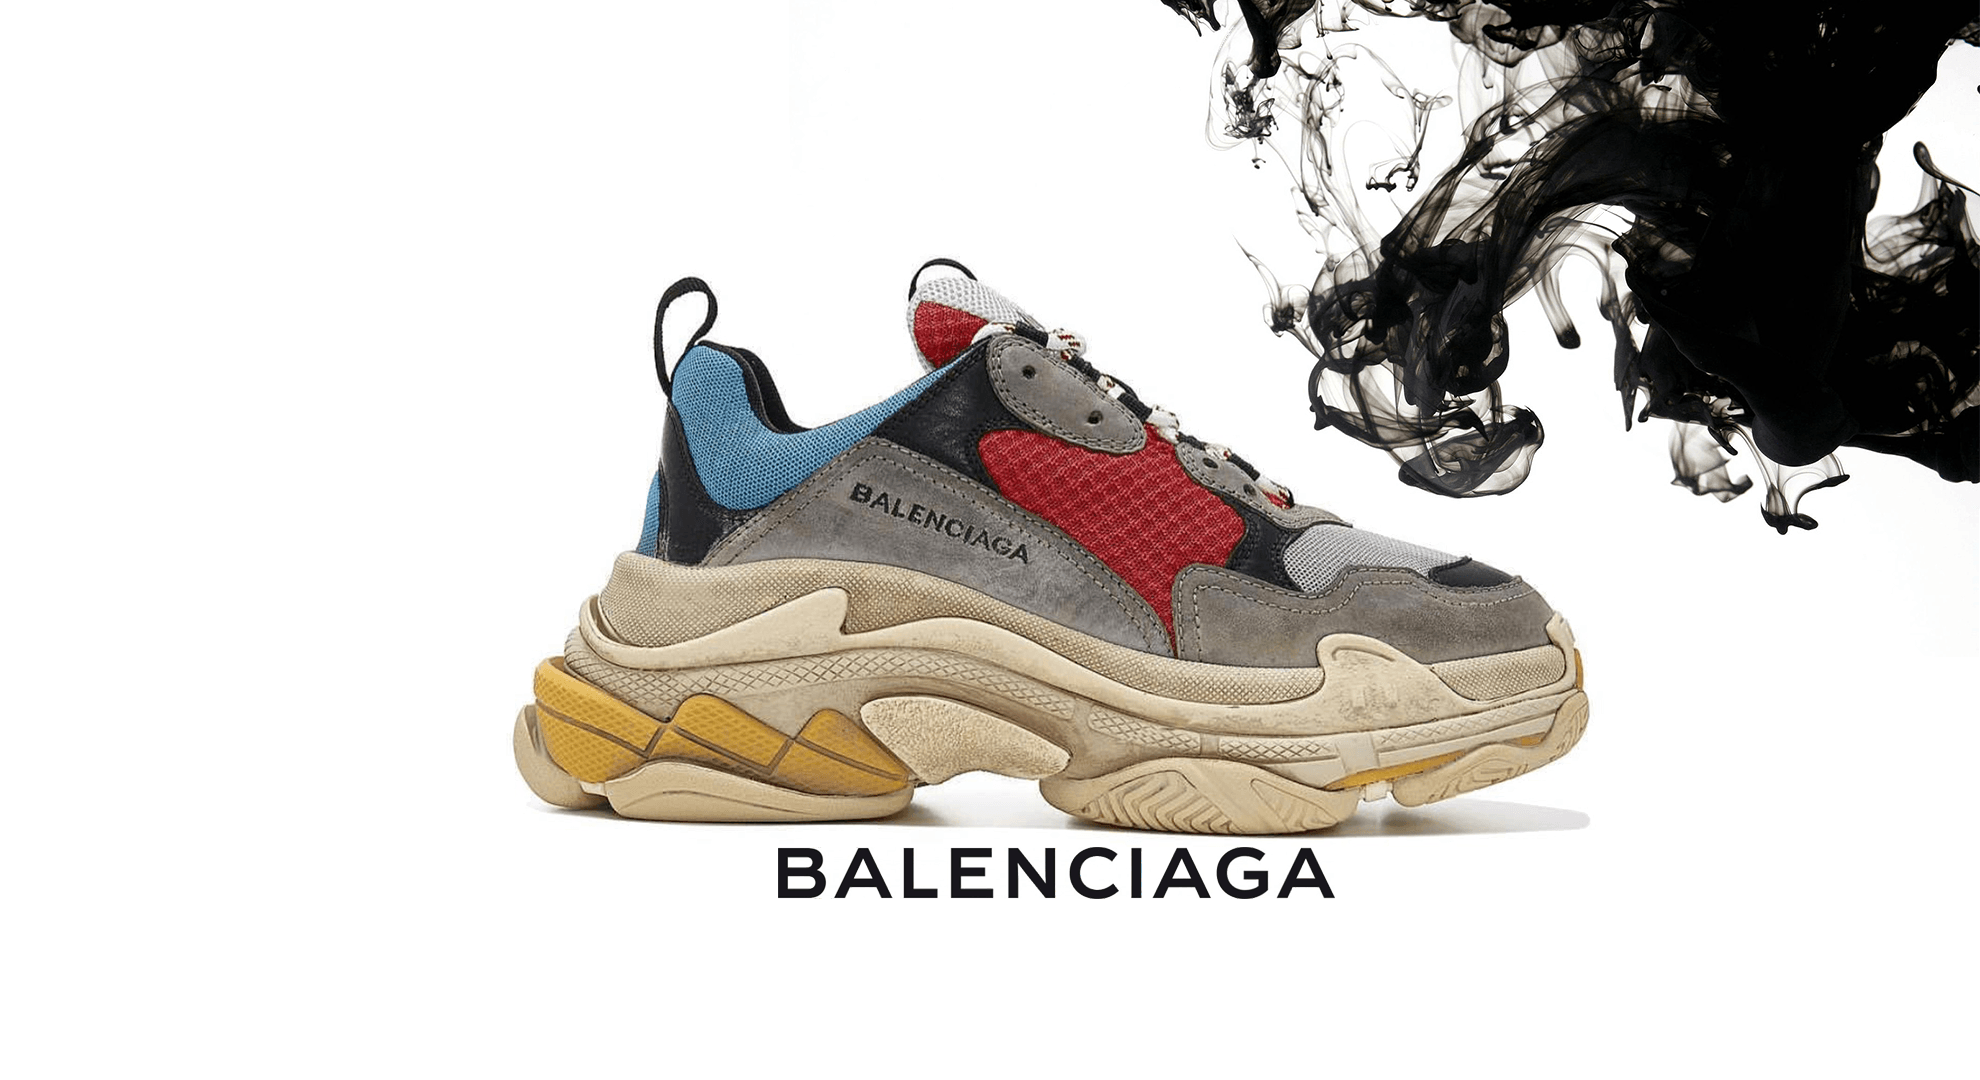 Balenciaga Shoes Wallpapers - Wallpaper Cave